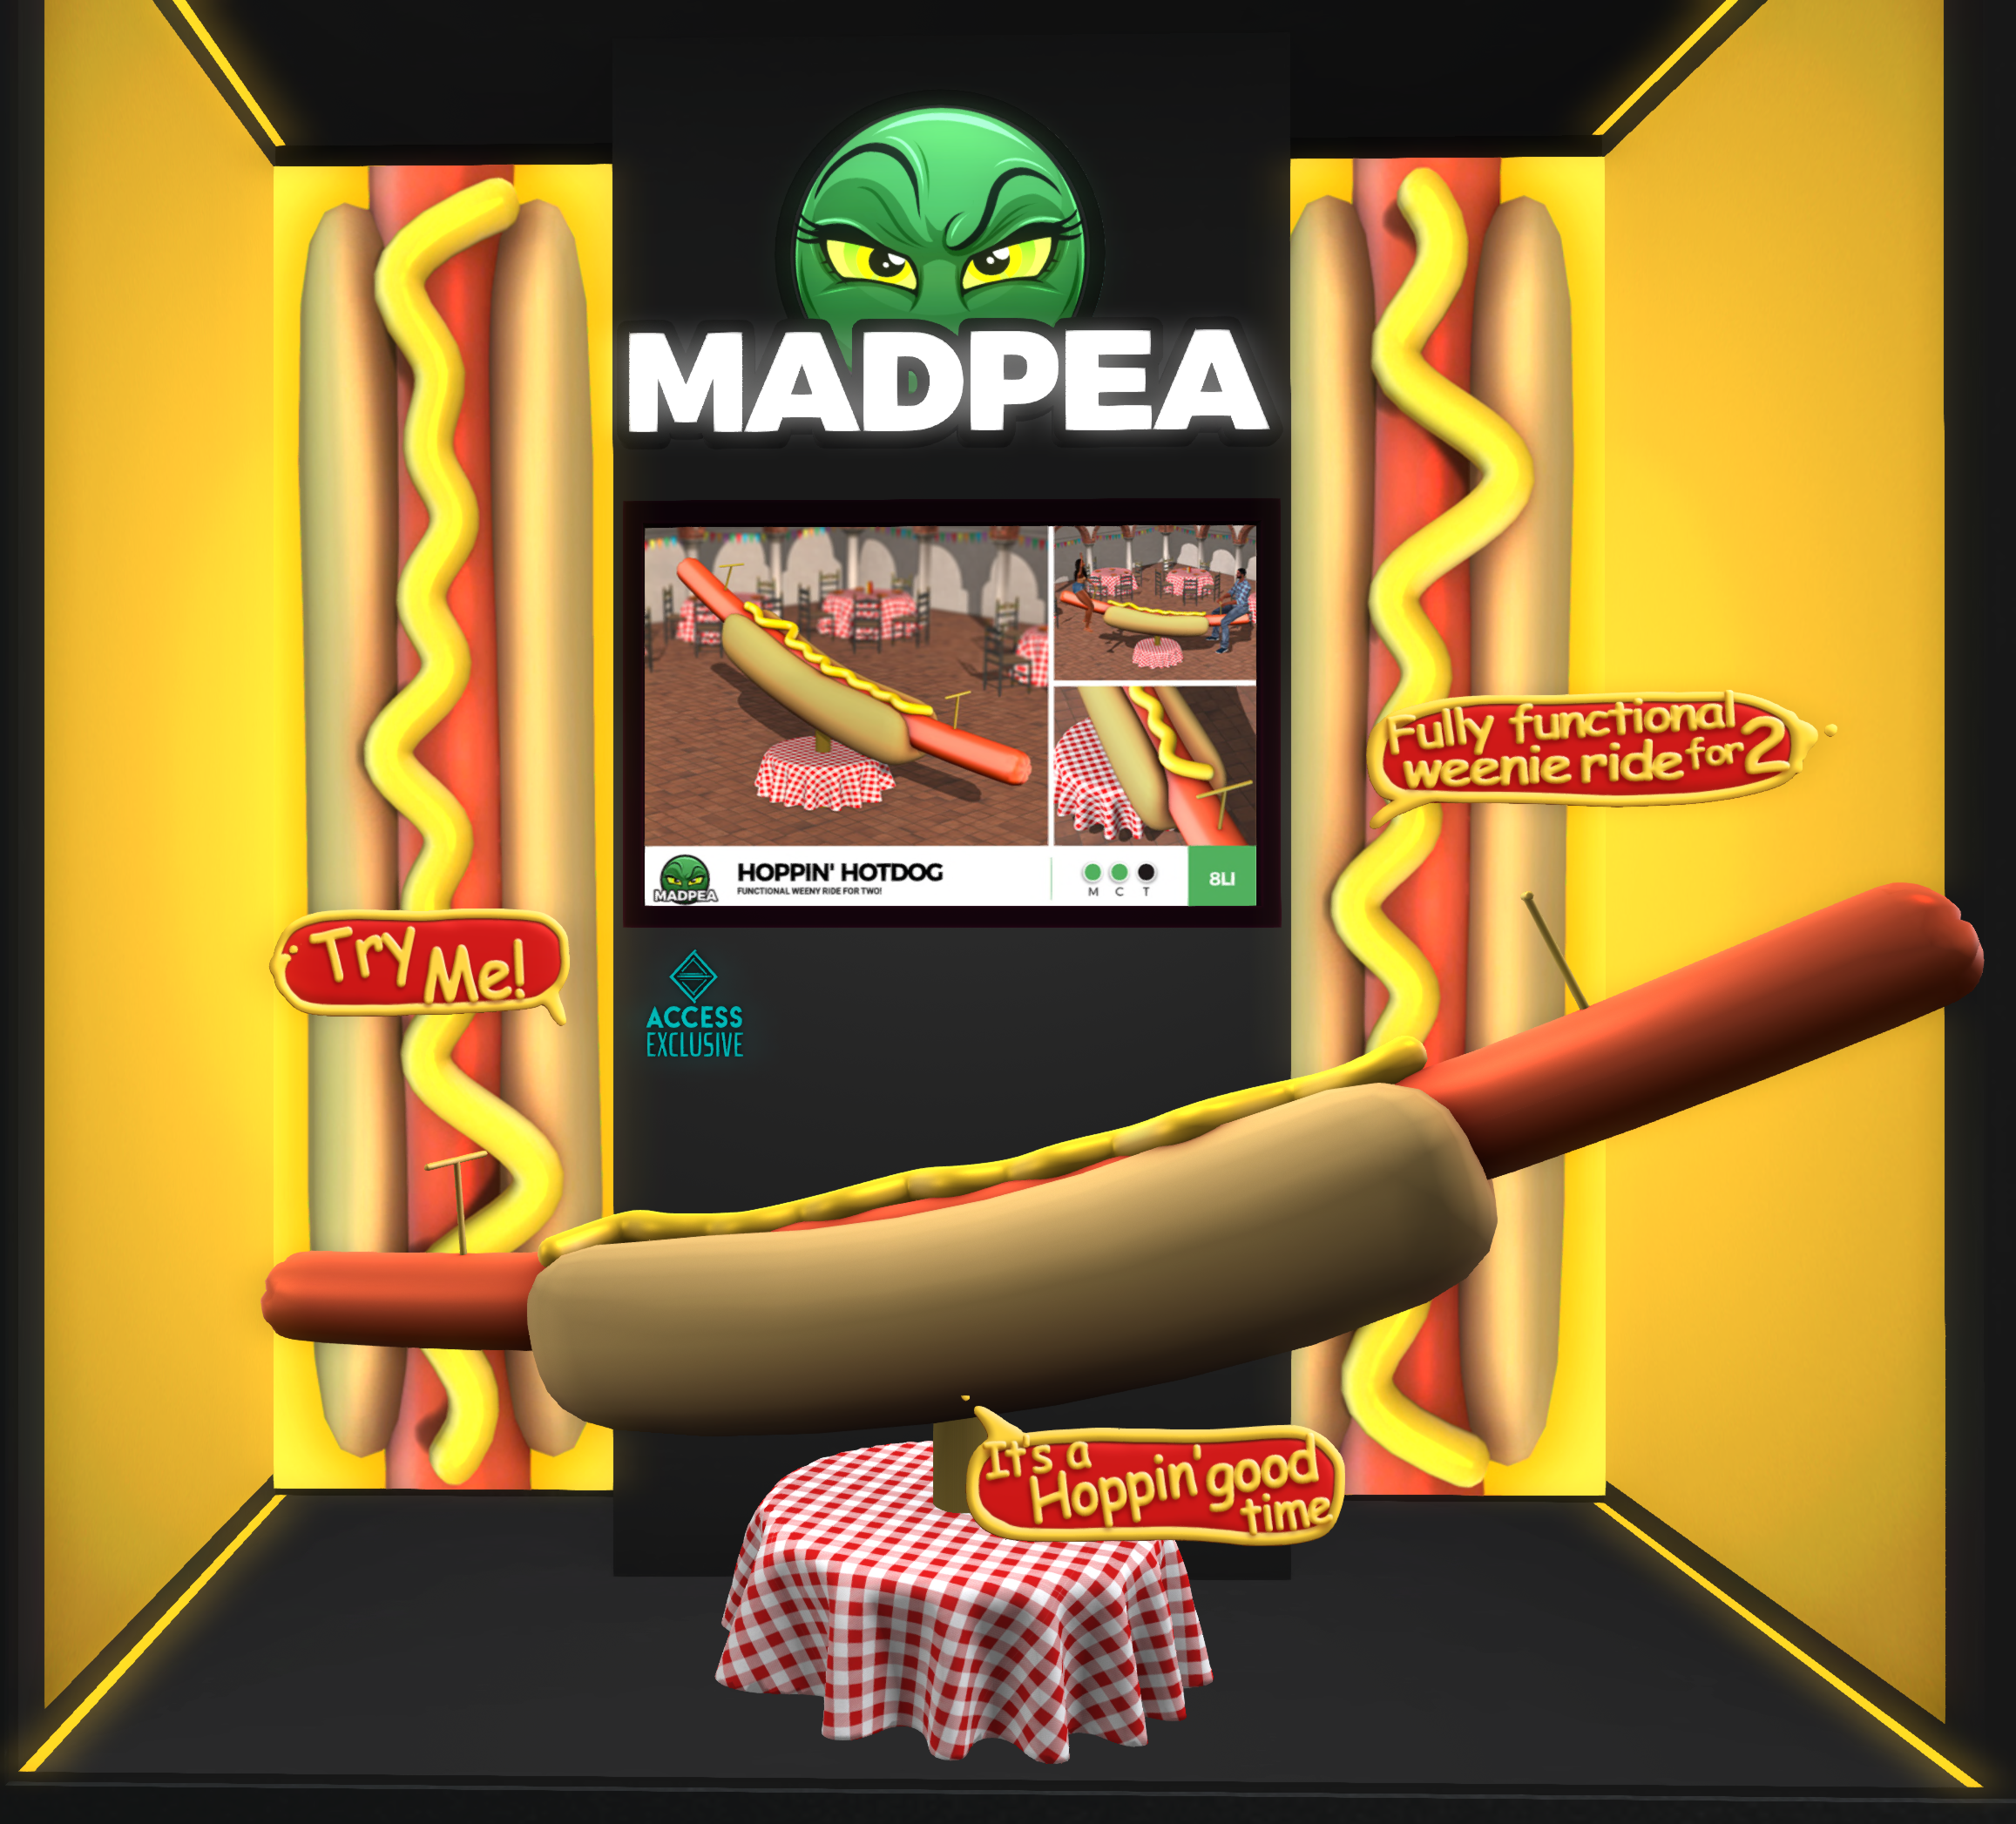 MadPea – Hoppin Hotdog